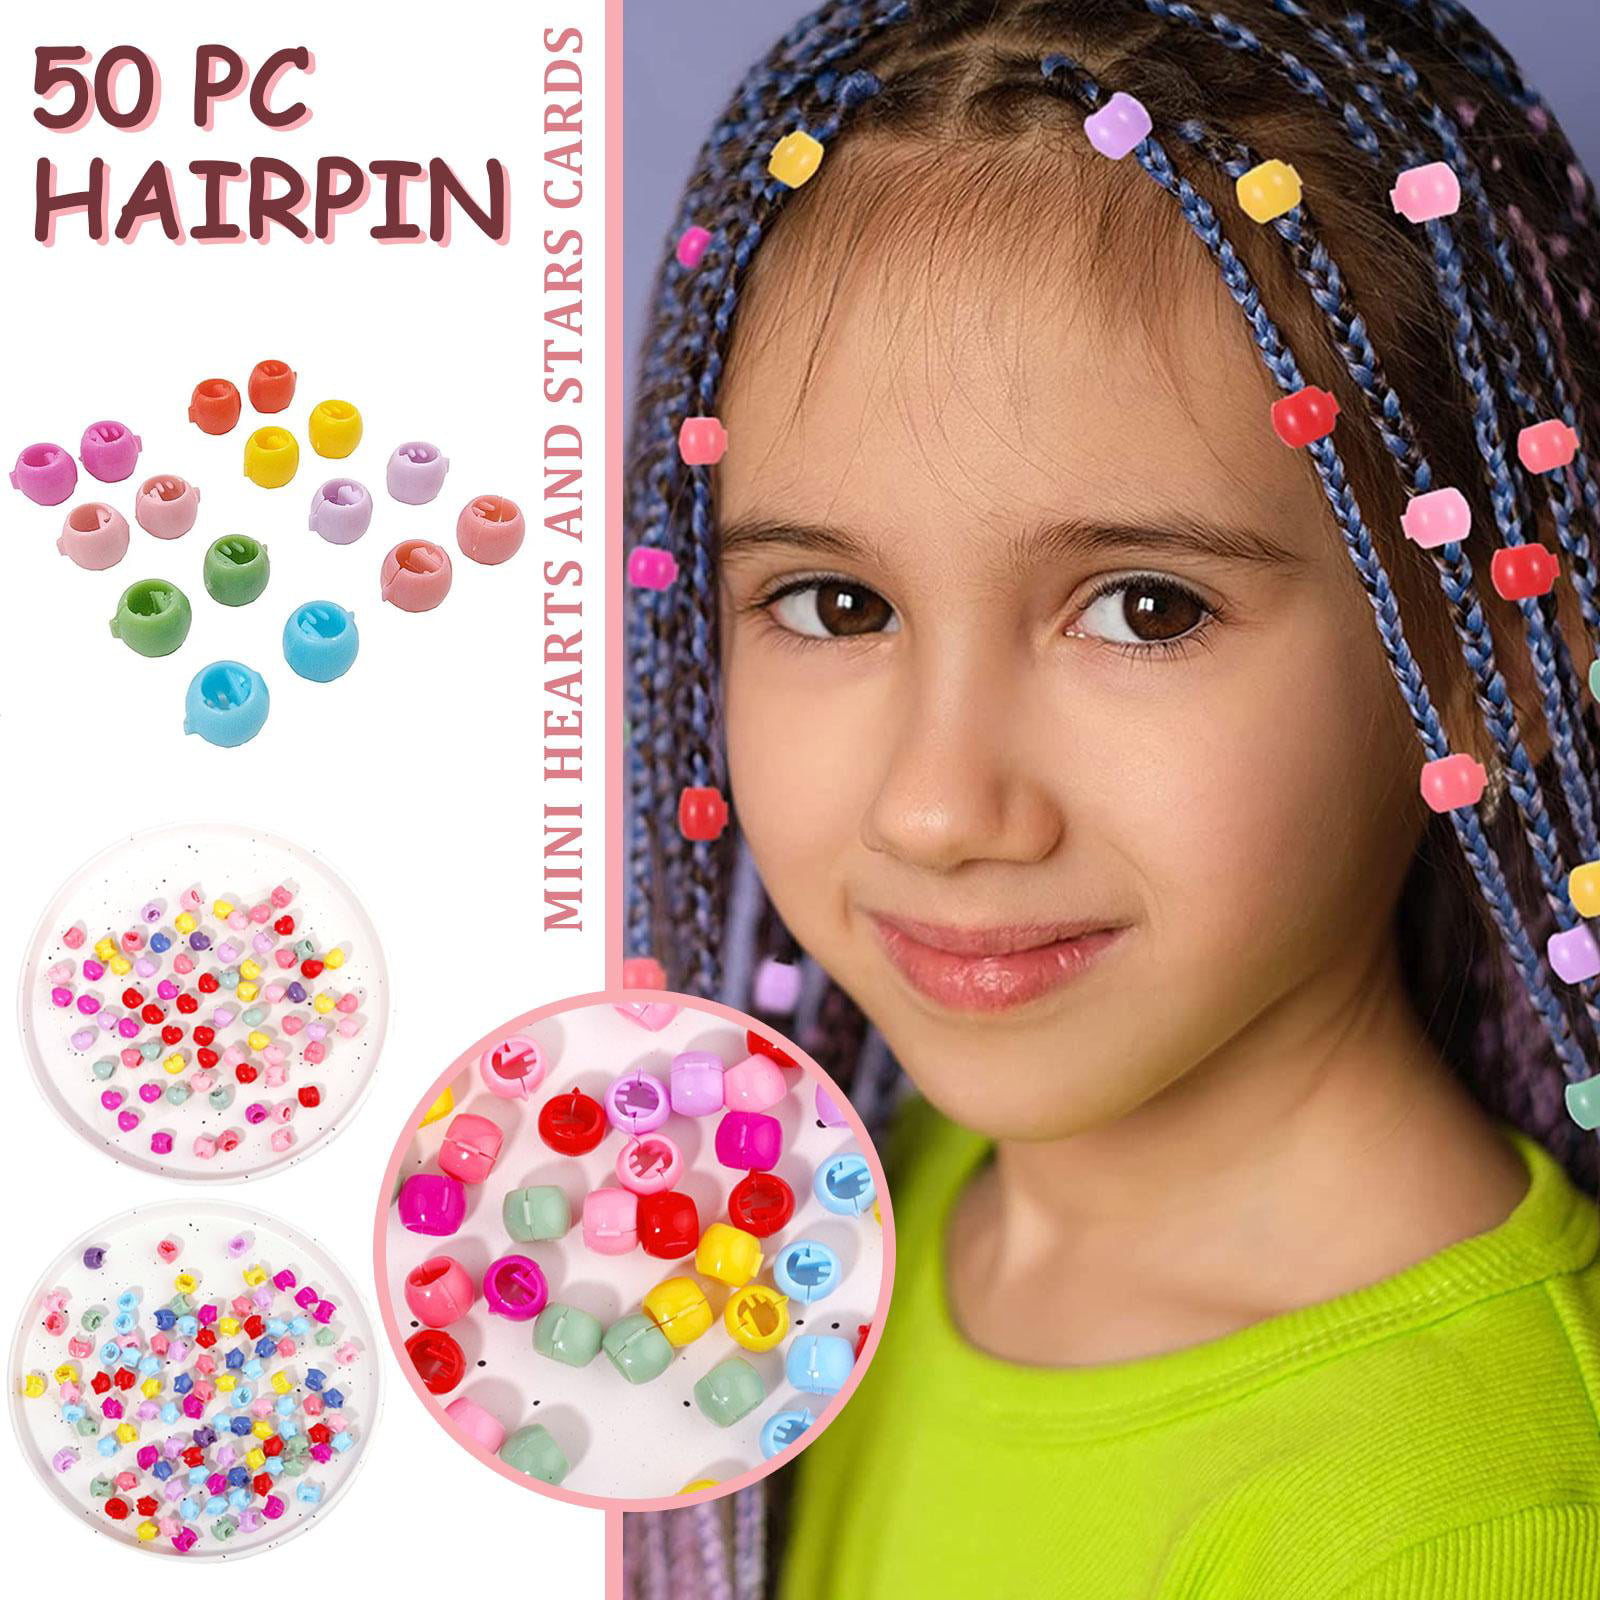 50pcs colorful hair clip kit, hair grips pink, bobby pins brown hair,  makeup hair styling barrettes